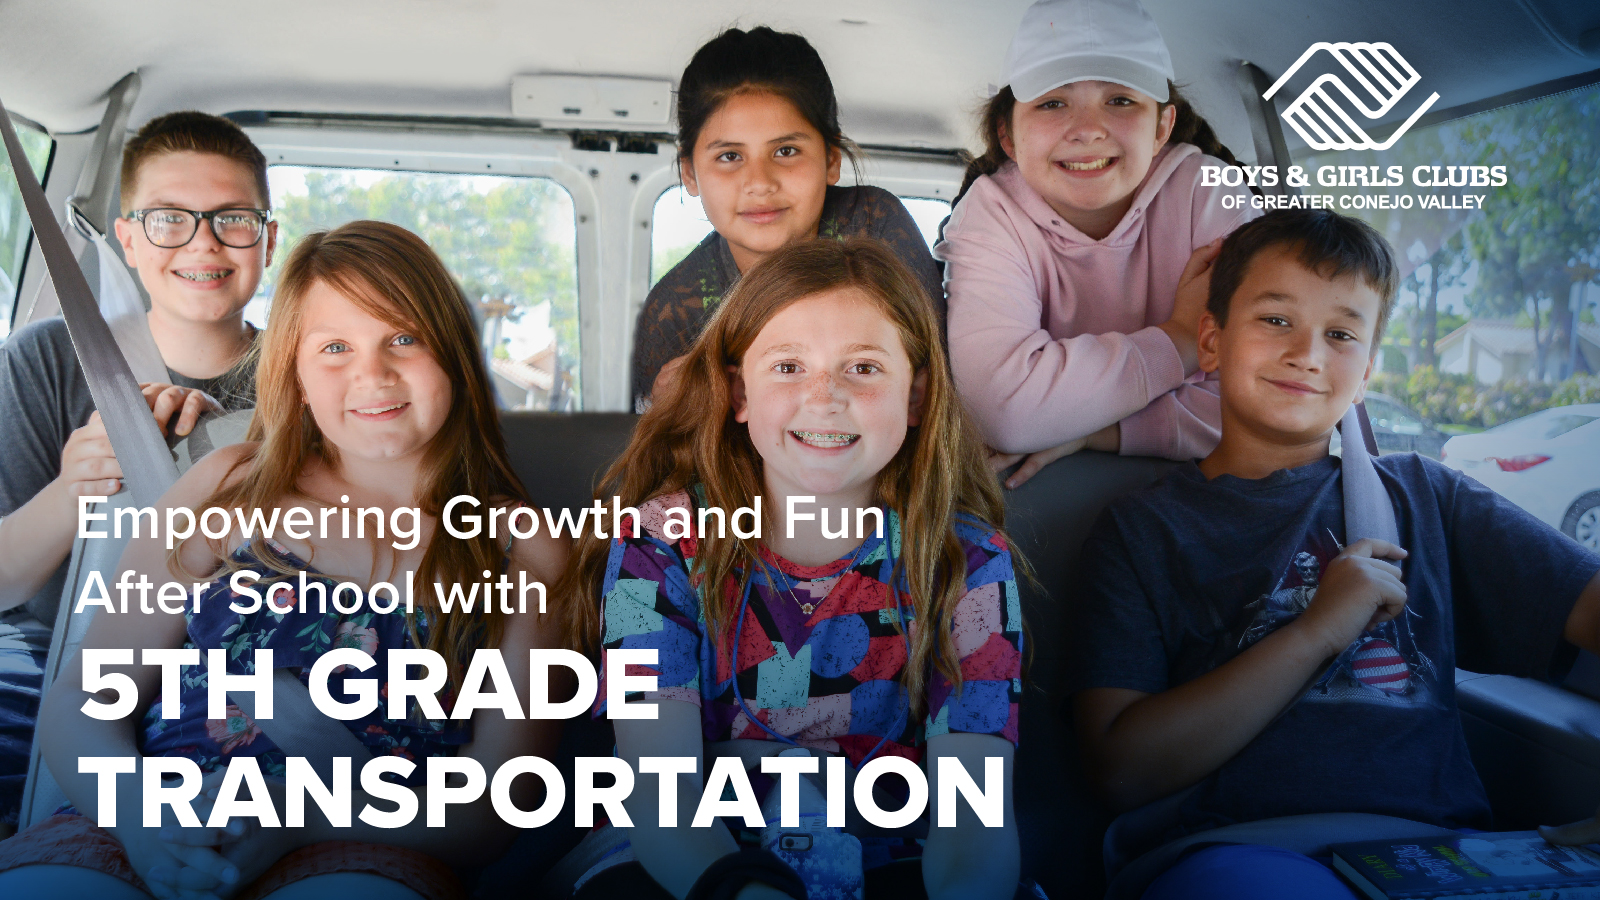 Transportation to after school programs